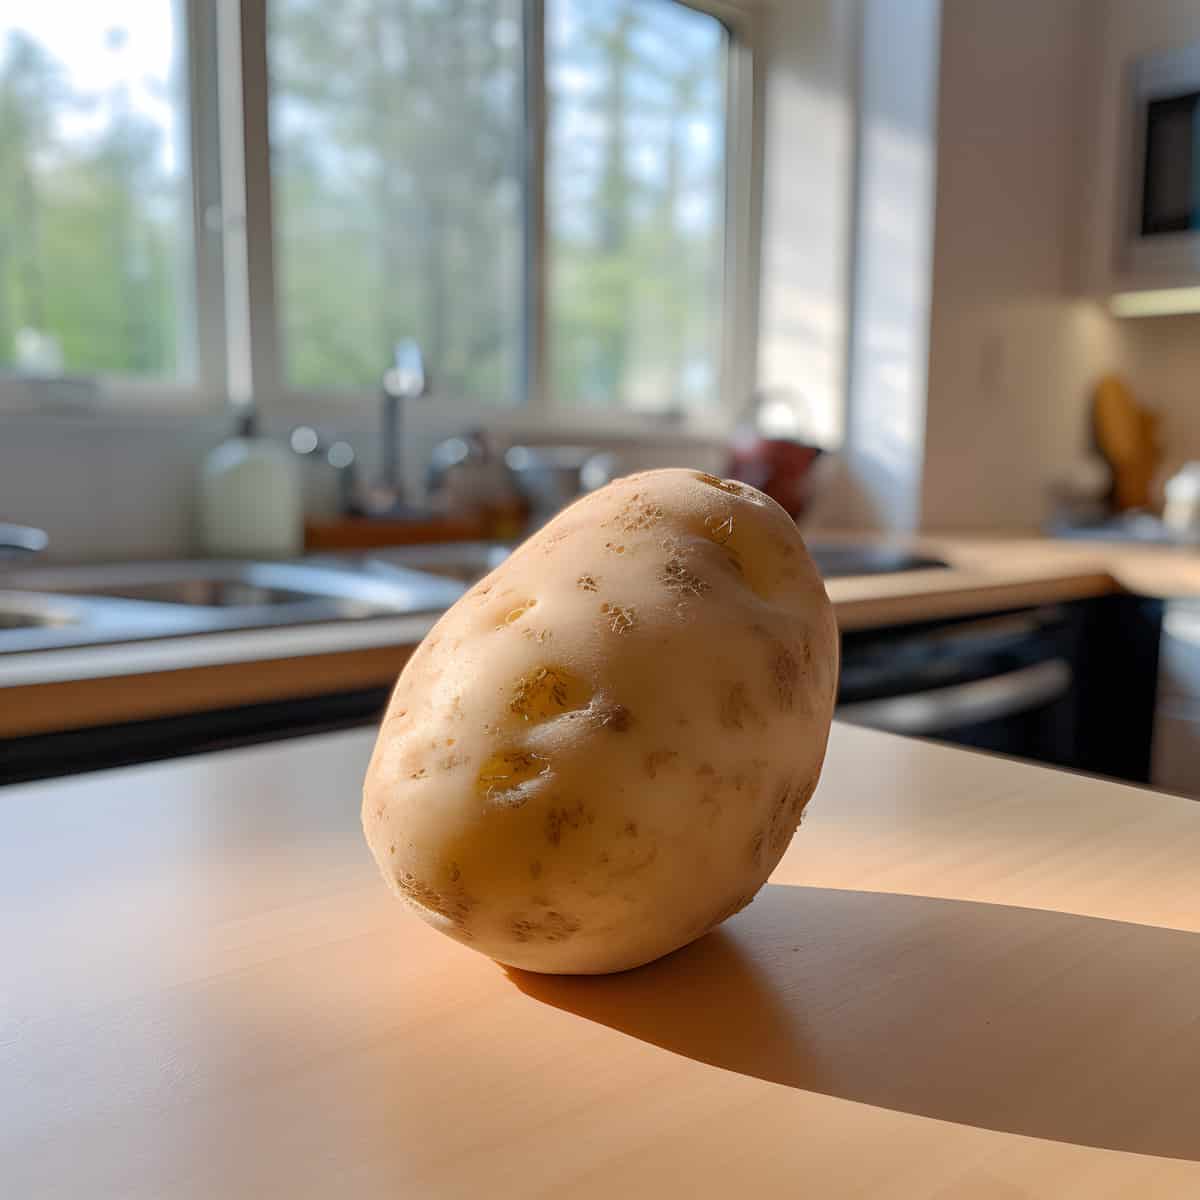 Sieglinde Potatoes on a kitchen counter